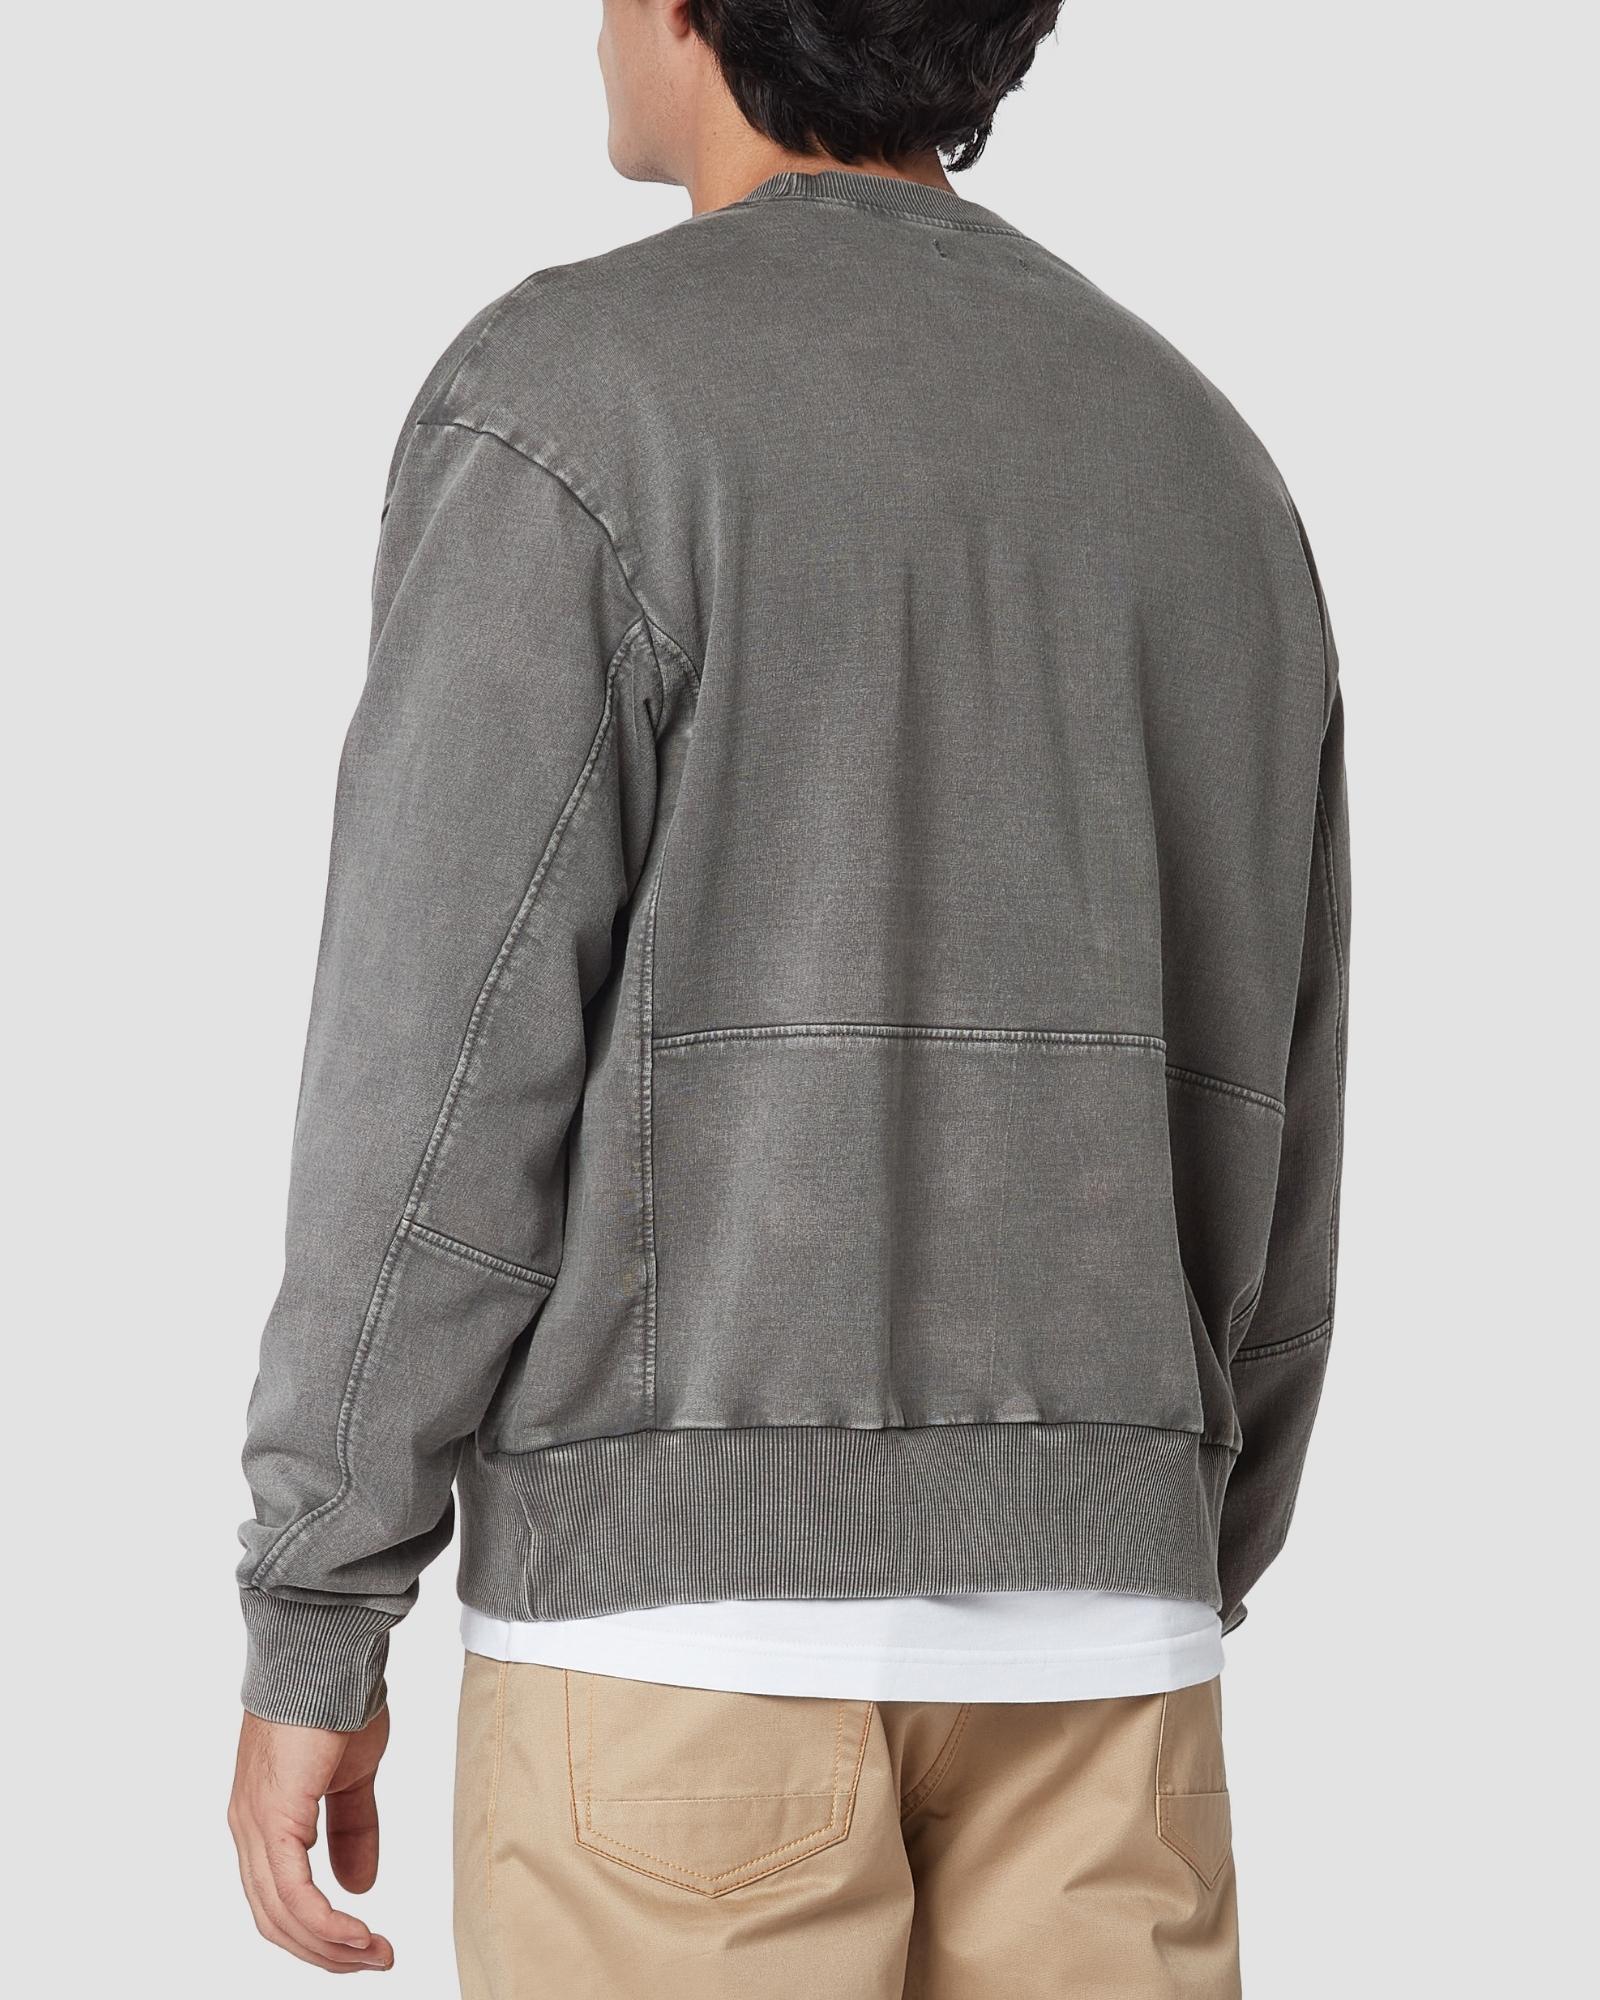 cityof_ - Distressed Panelled Sweatshirt